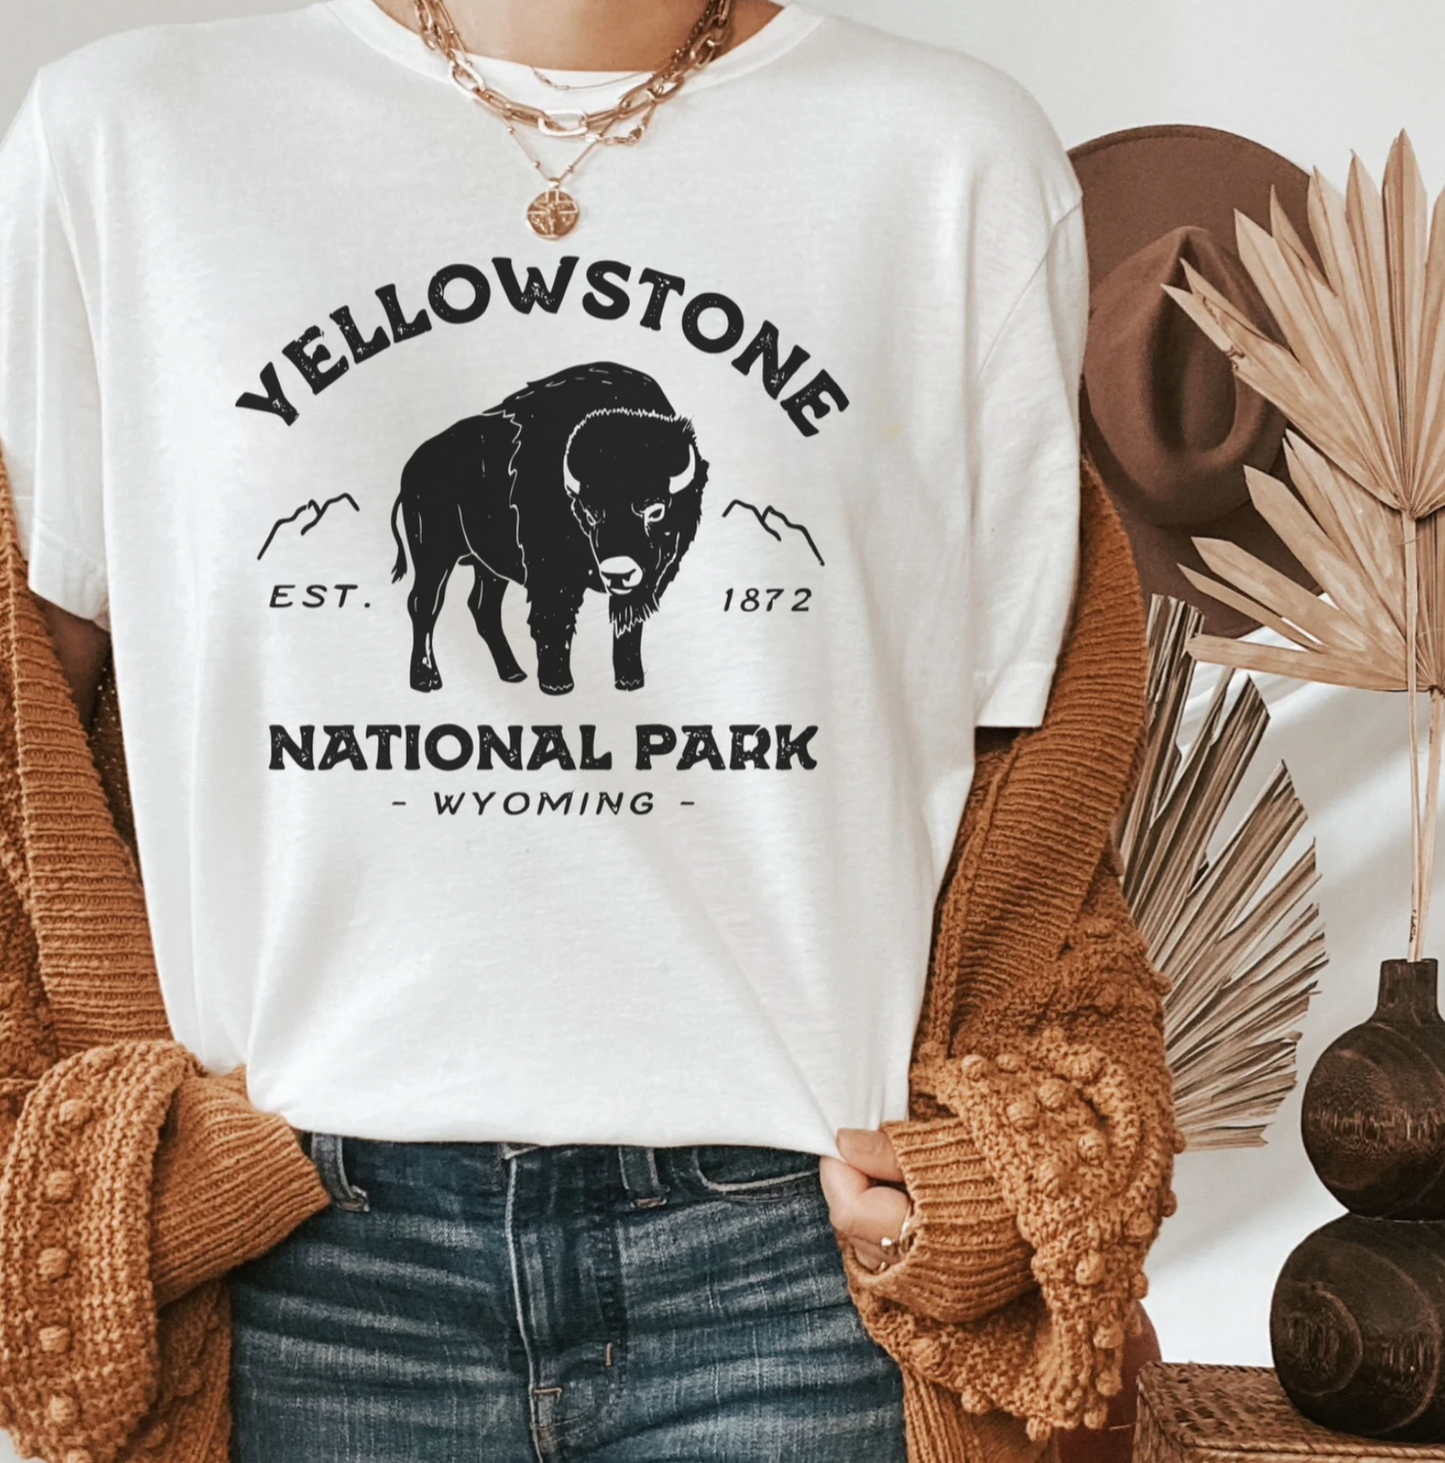 Yellowstone National Park Unisex T-Shirt